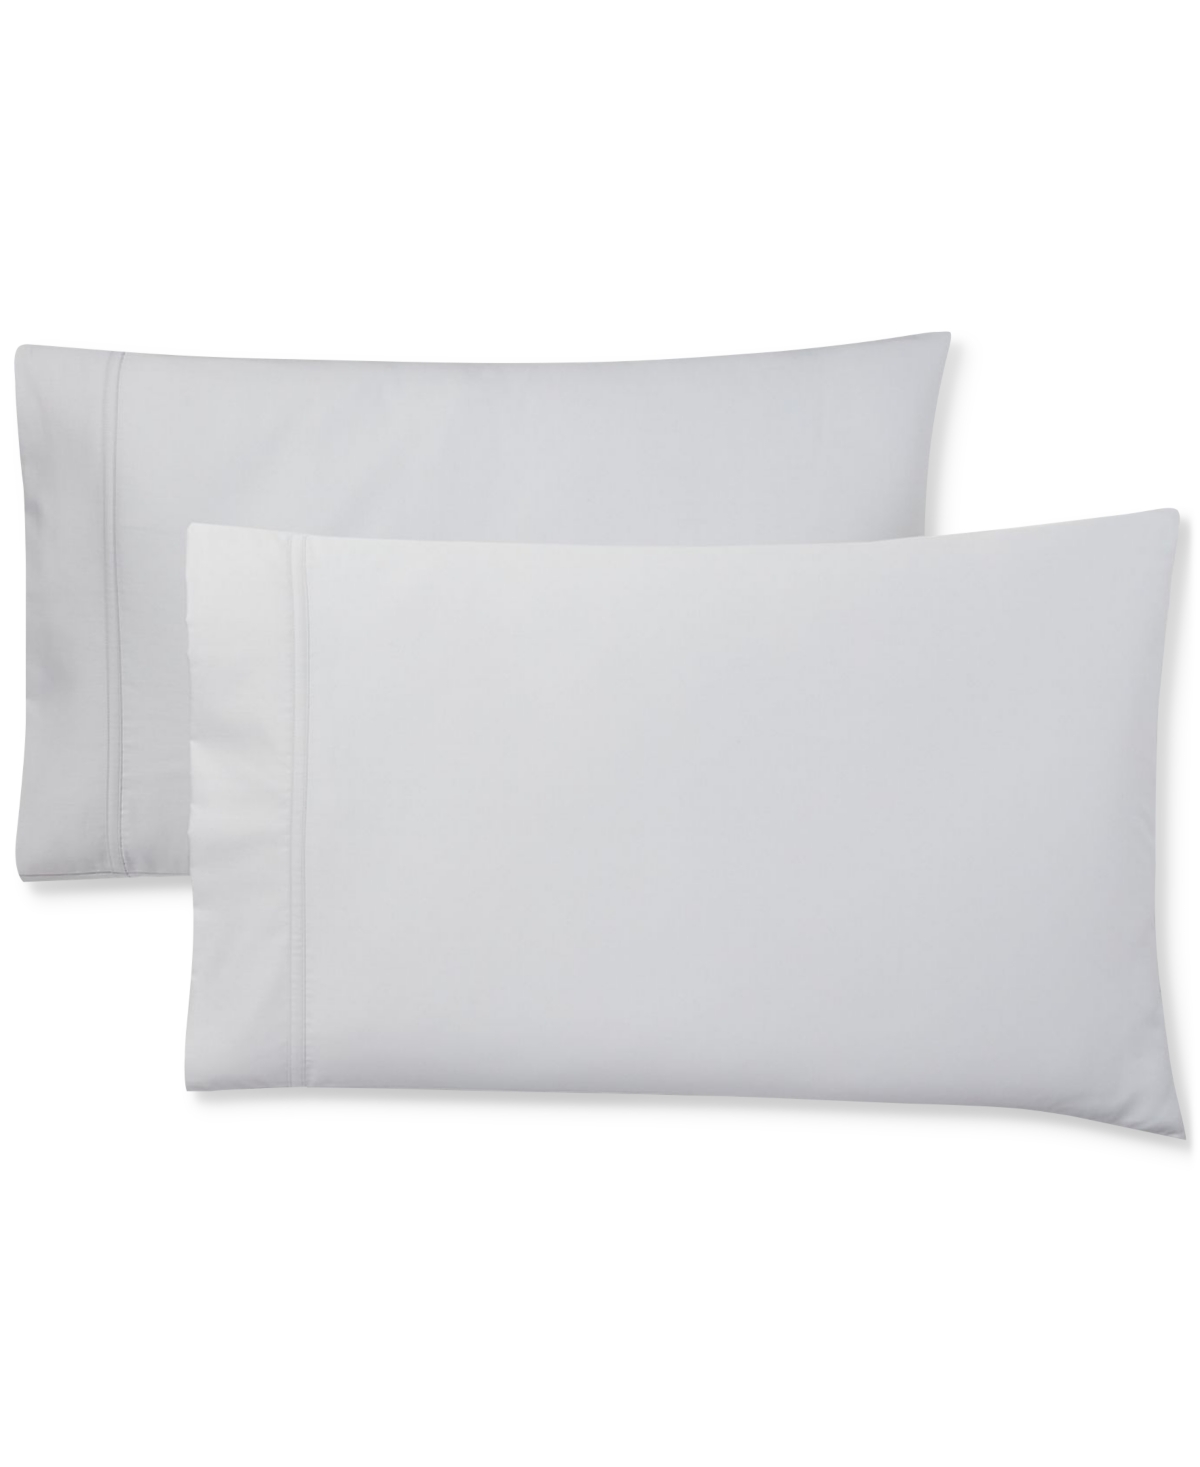 Lauren Ralph Lauren Spencer 475 Thread Count Cotton Sateen Pillowcase Pair, King In Soft Grey